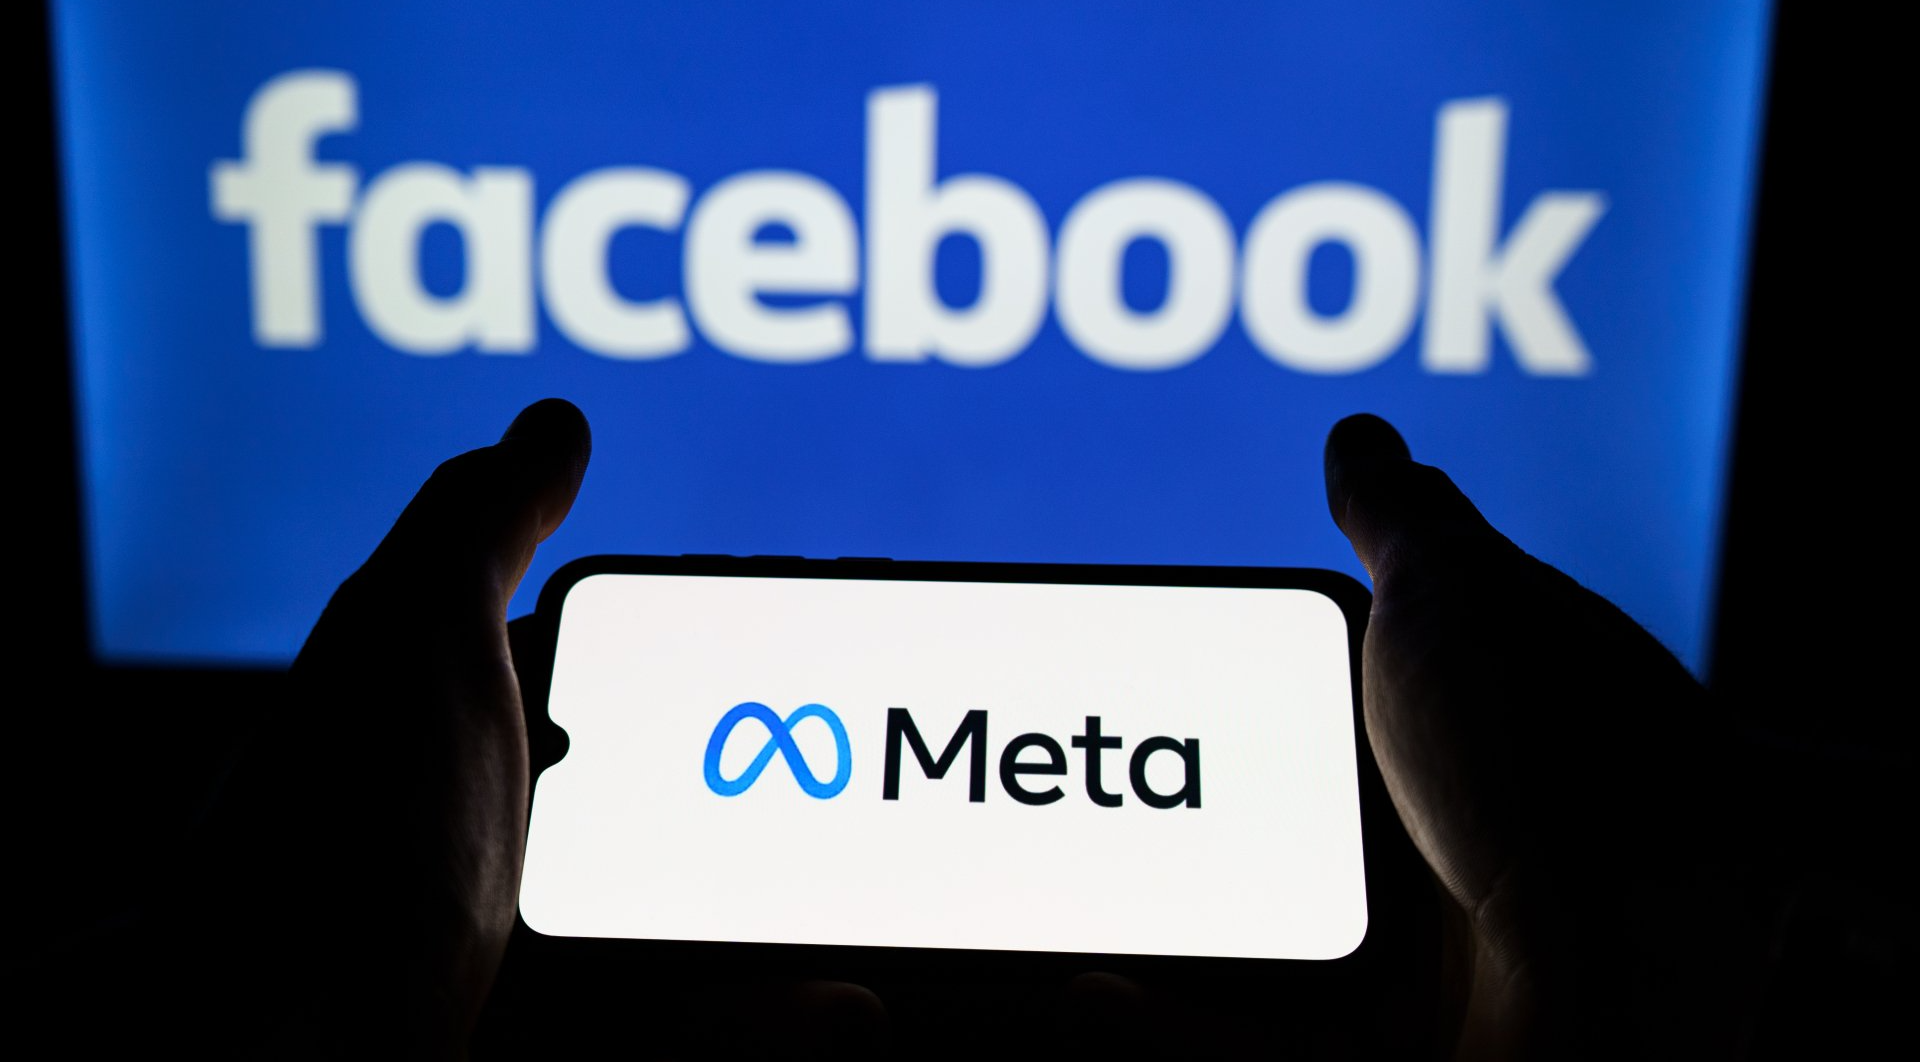 Facebook Changes name to Meta